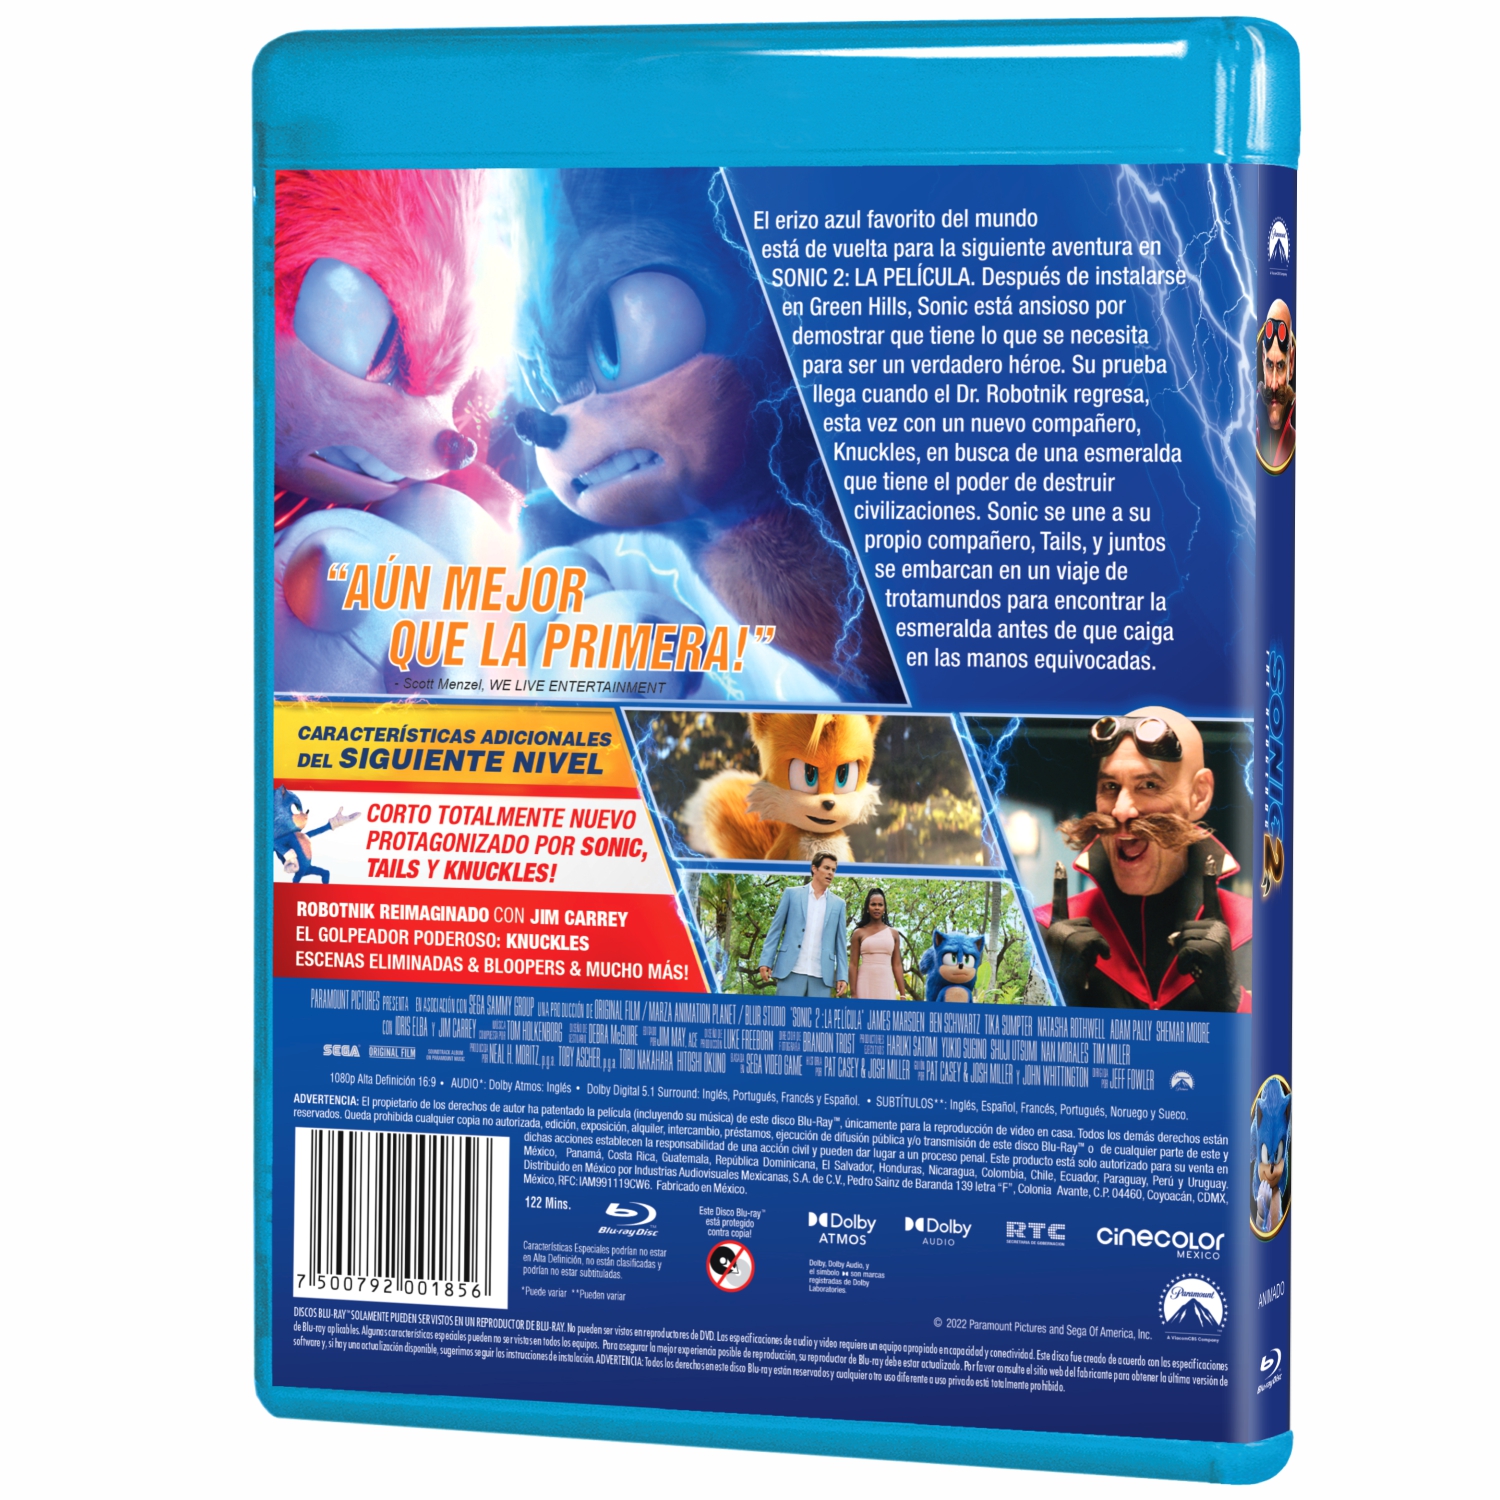 Sonic O Filme (Bd Steelbook) : Jim Carrey, James Marsden, Tika Sumpter,  Jeff Fowler: : DVD e Blu-ray